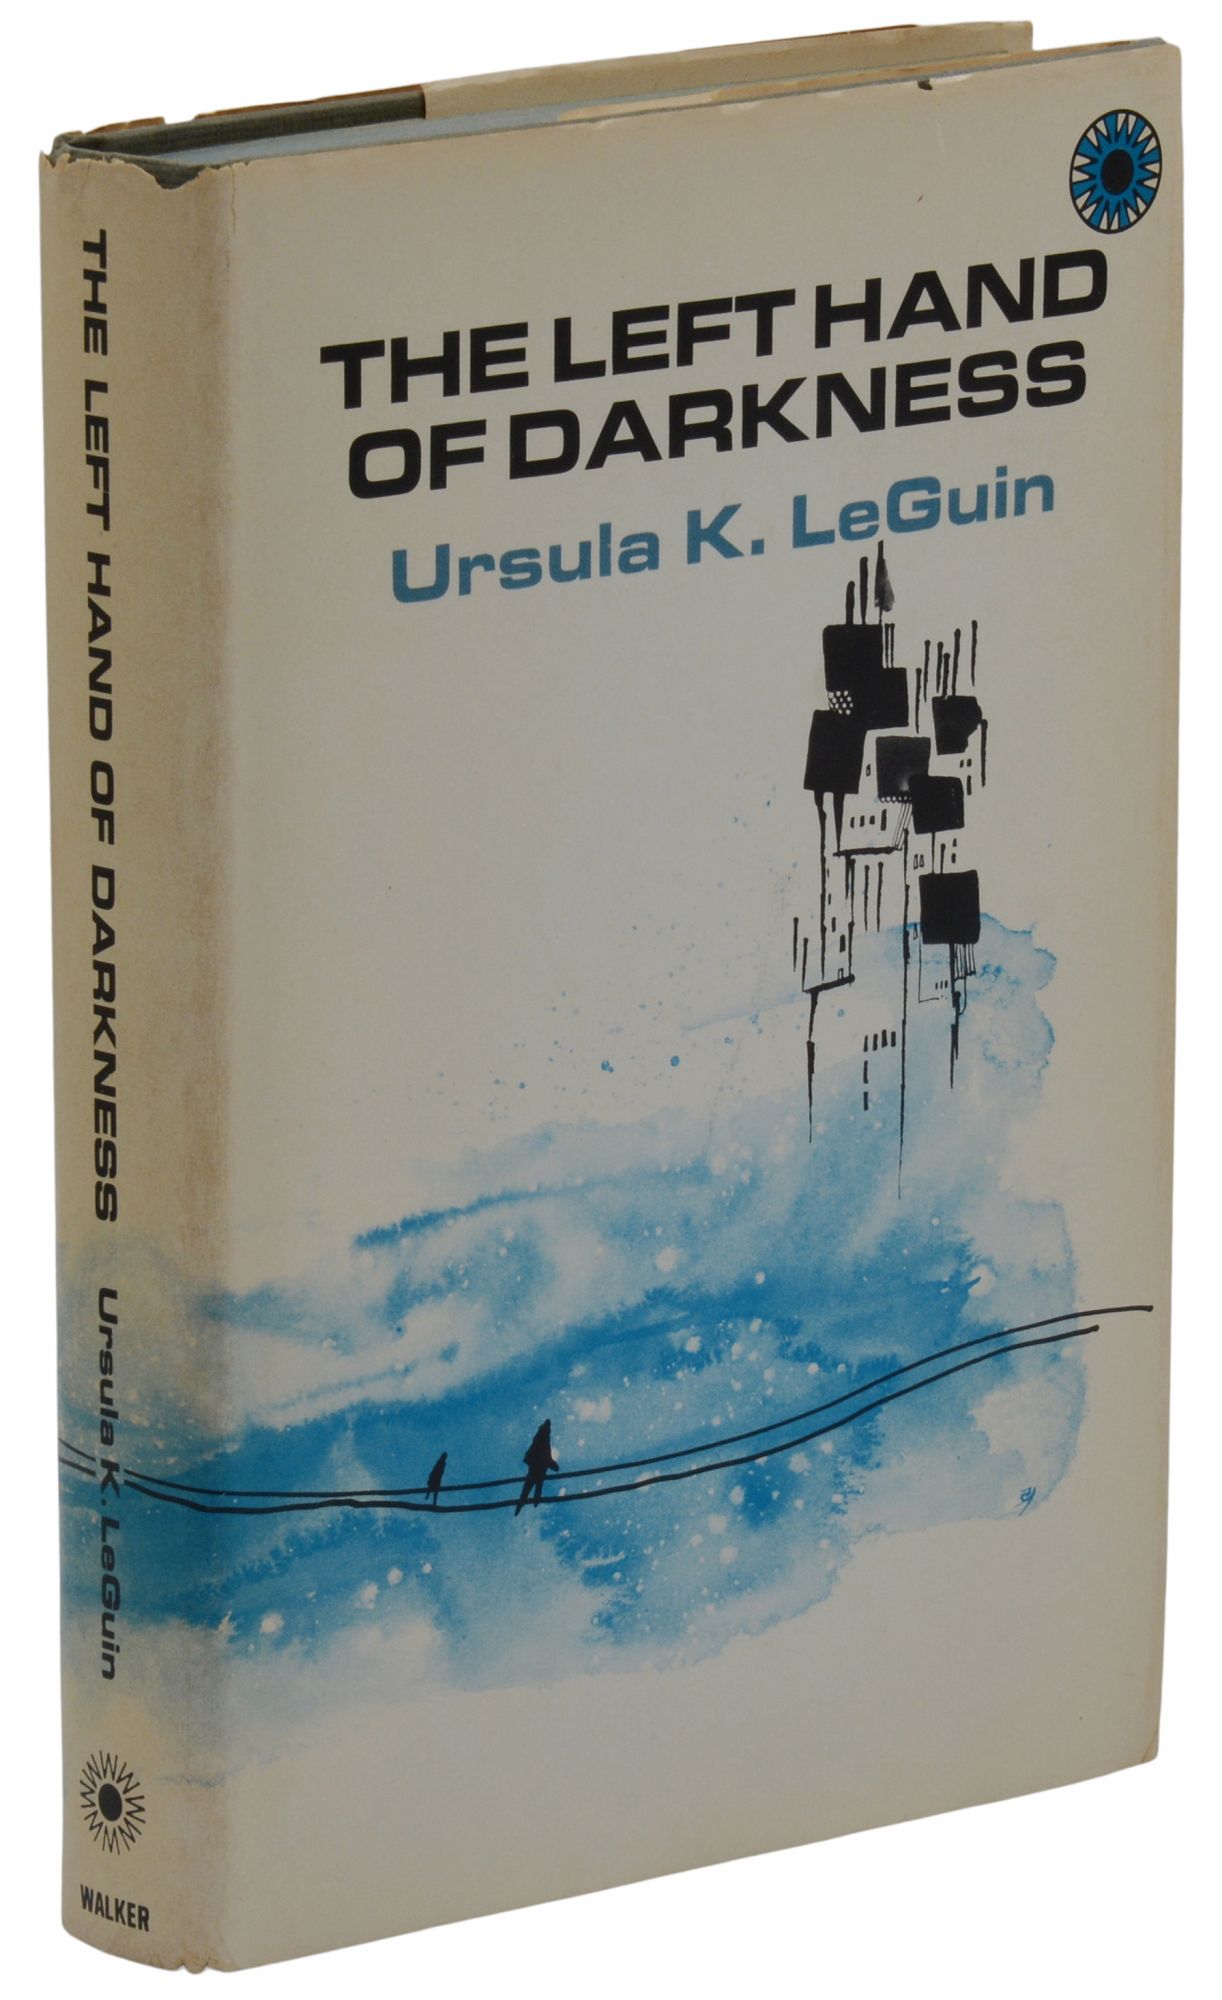 The Left Hand of Darkness de LeGuin, Ursula K.: Near Fine (1969) First Edition. | Burnside Rare Books, ABAA